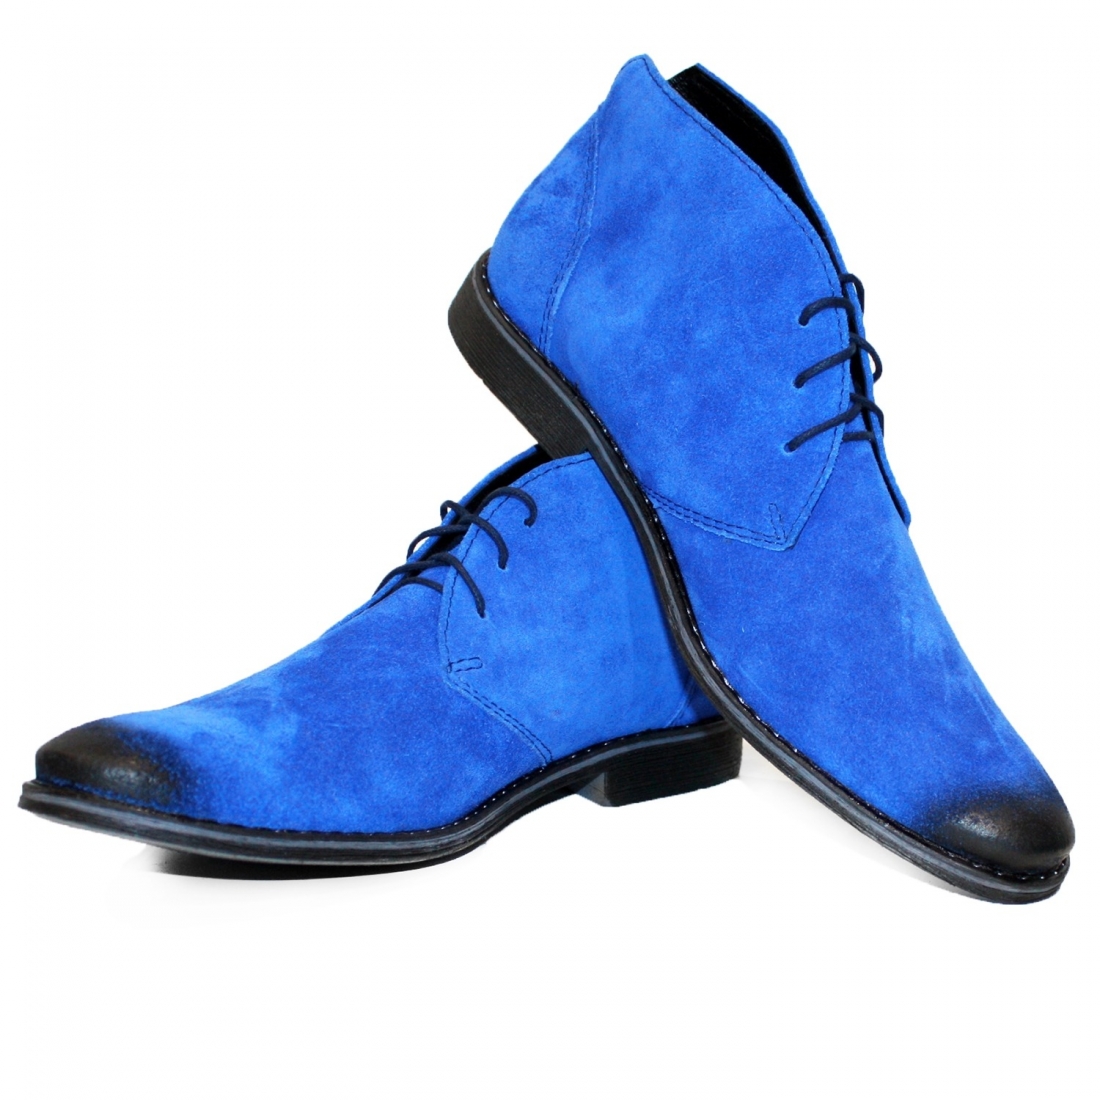 Modello Bilgetto - Buty Chukka - Handmade Colorful Italian Leather Shoes